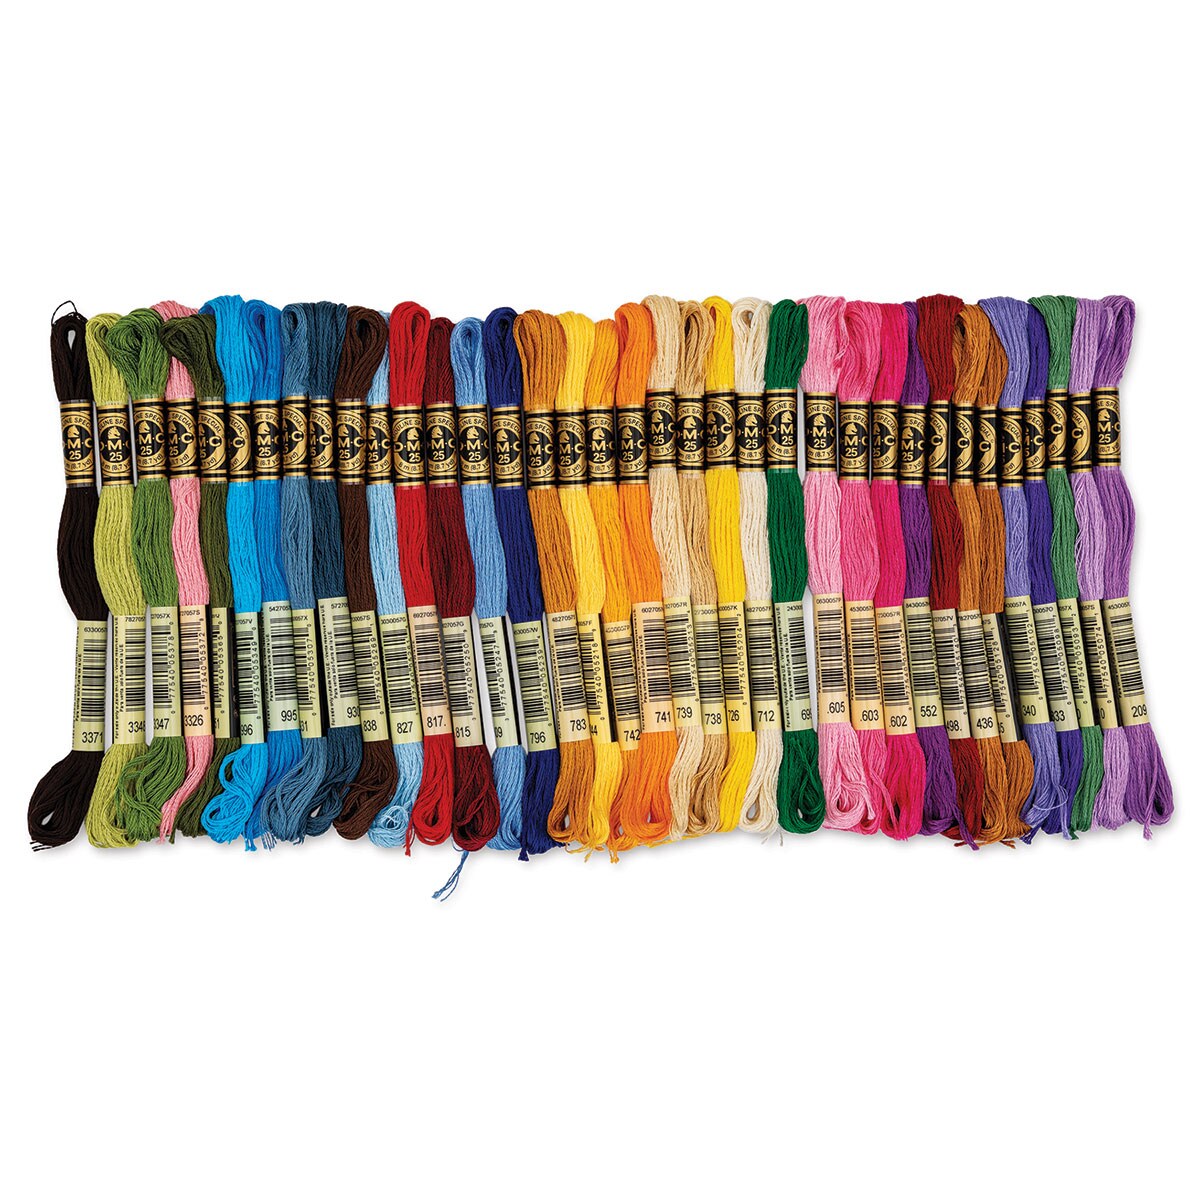 DMC Cotton Embroidery Floss - Popular, Set of 36